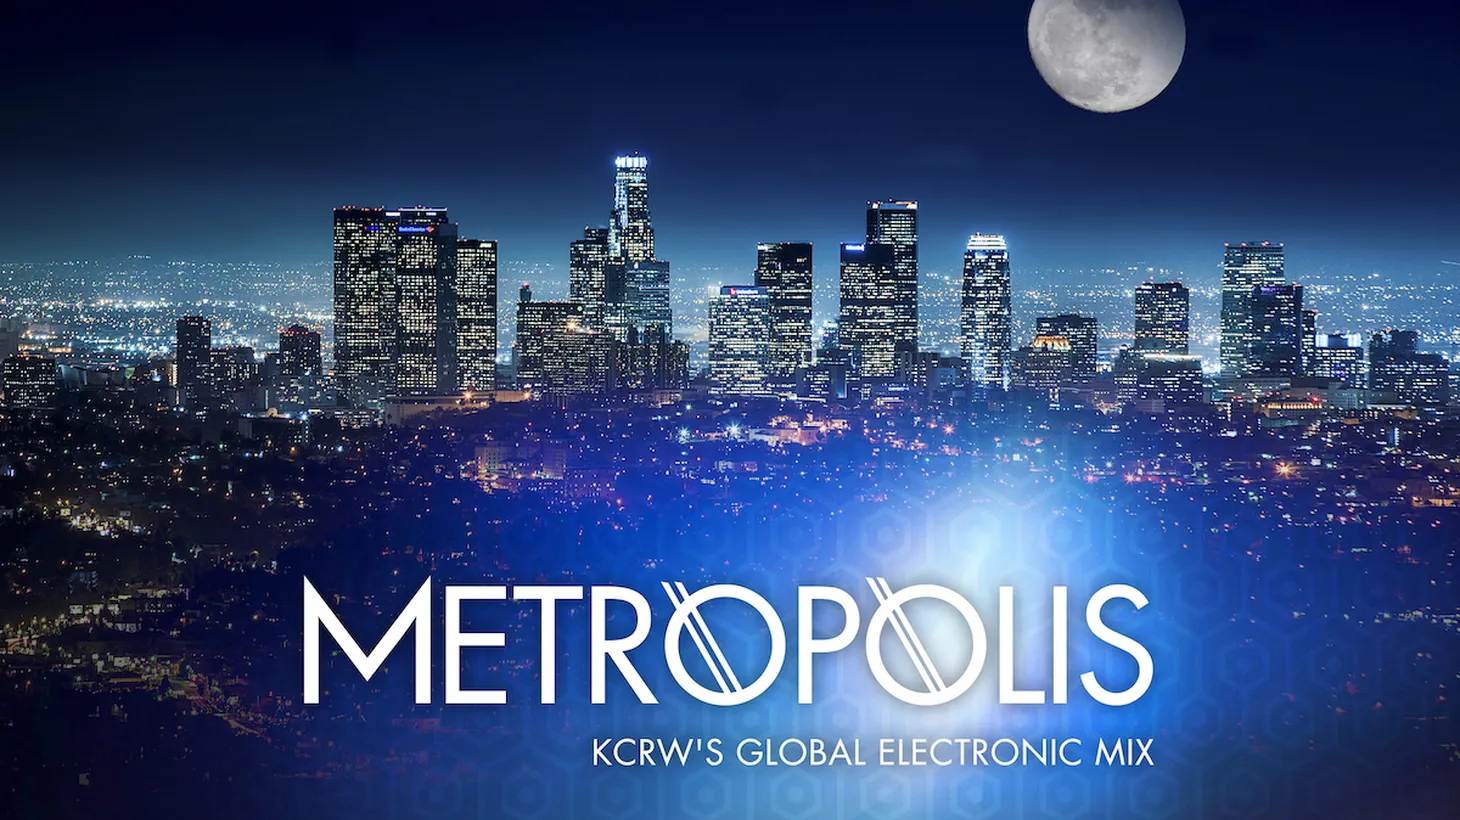 Metropolis playlist, March 20, 2021.